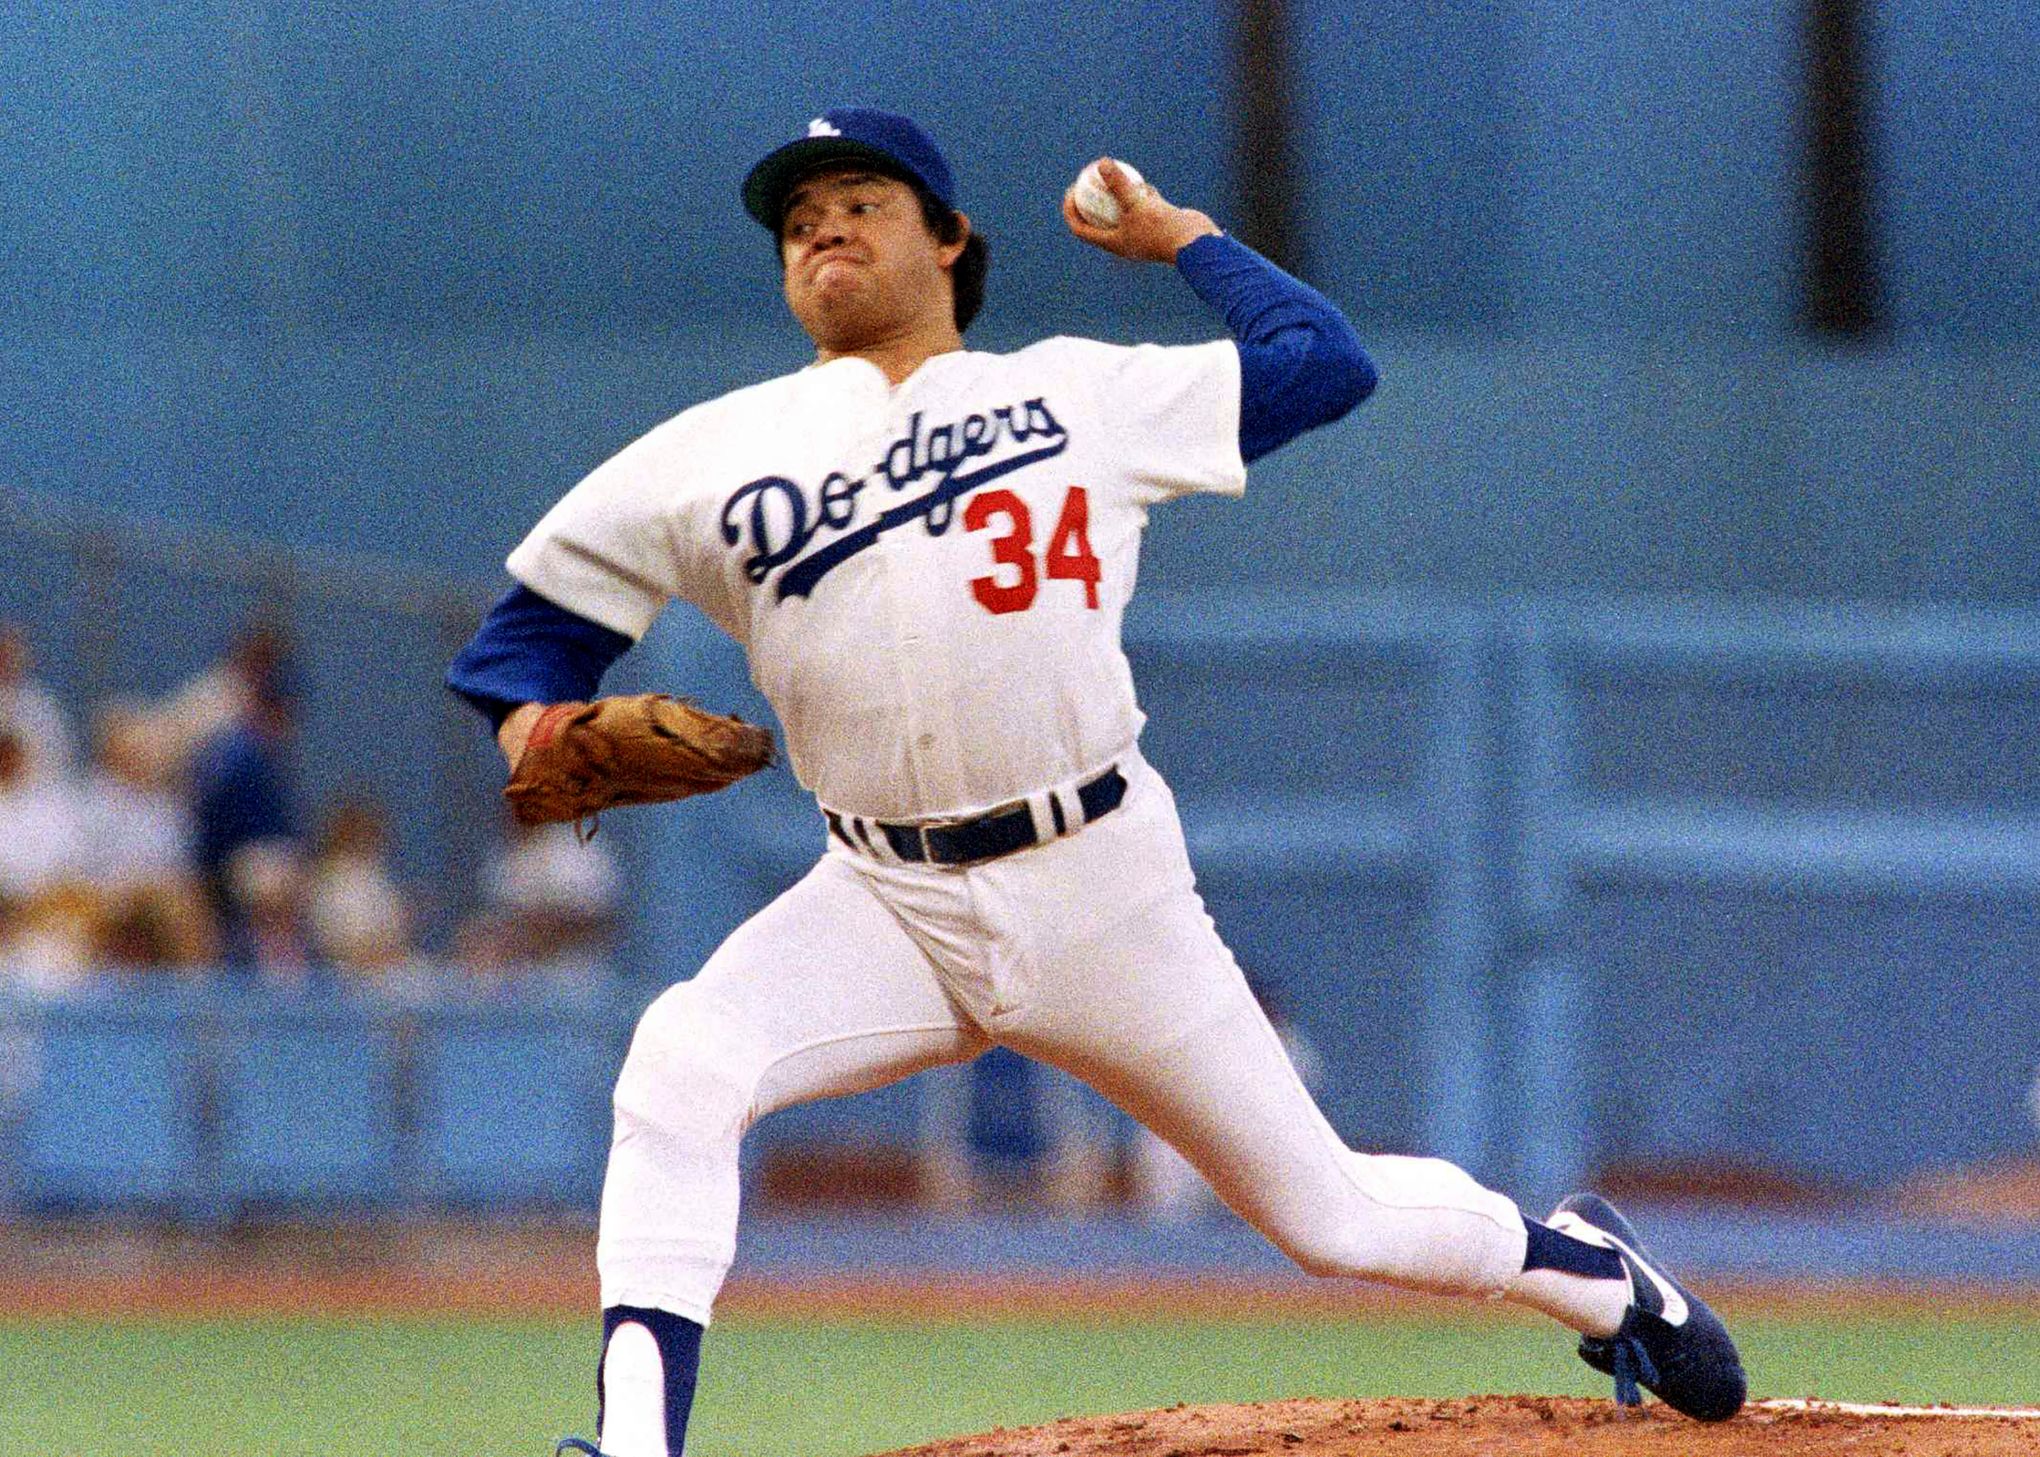 The Dodgers retire Fernando Valenzuela's No. 34 🇲🇽 @dodgers